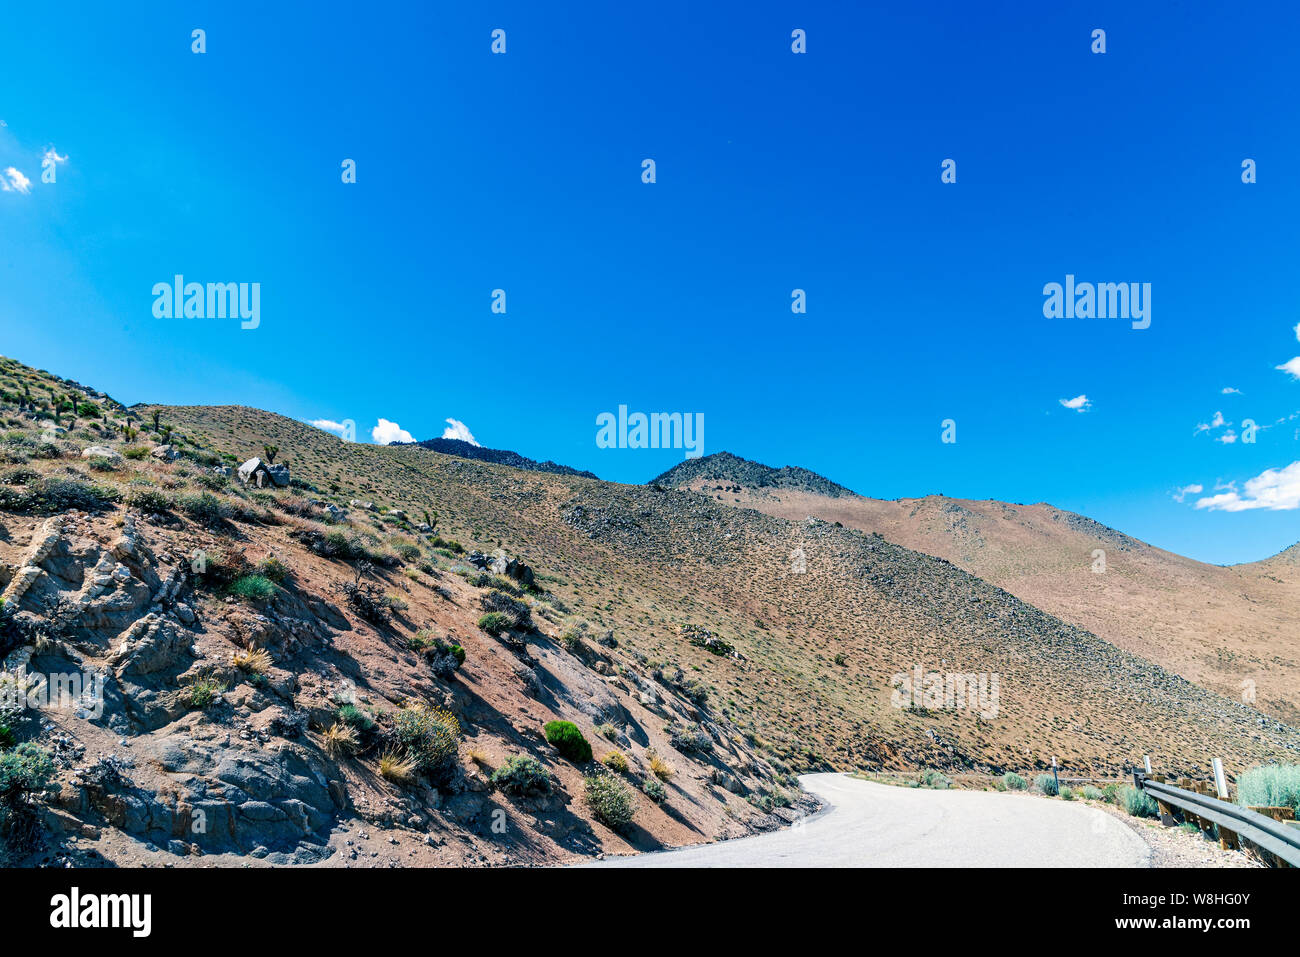 Gepflasterte Berg Straße, die Berge mit Leitplanke. Wüste felsigen Berghang unter strahlend blauen Himmel. Stockfoto